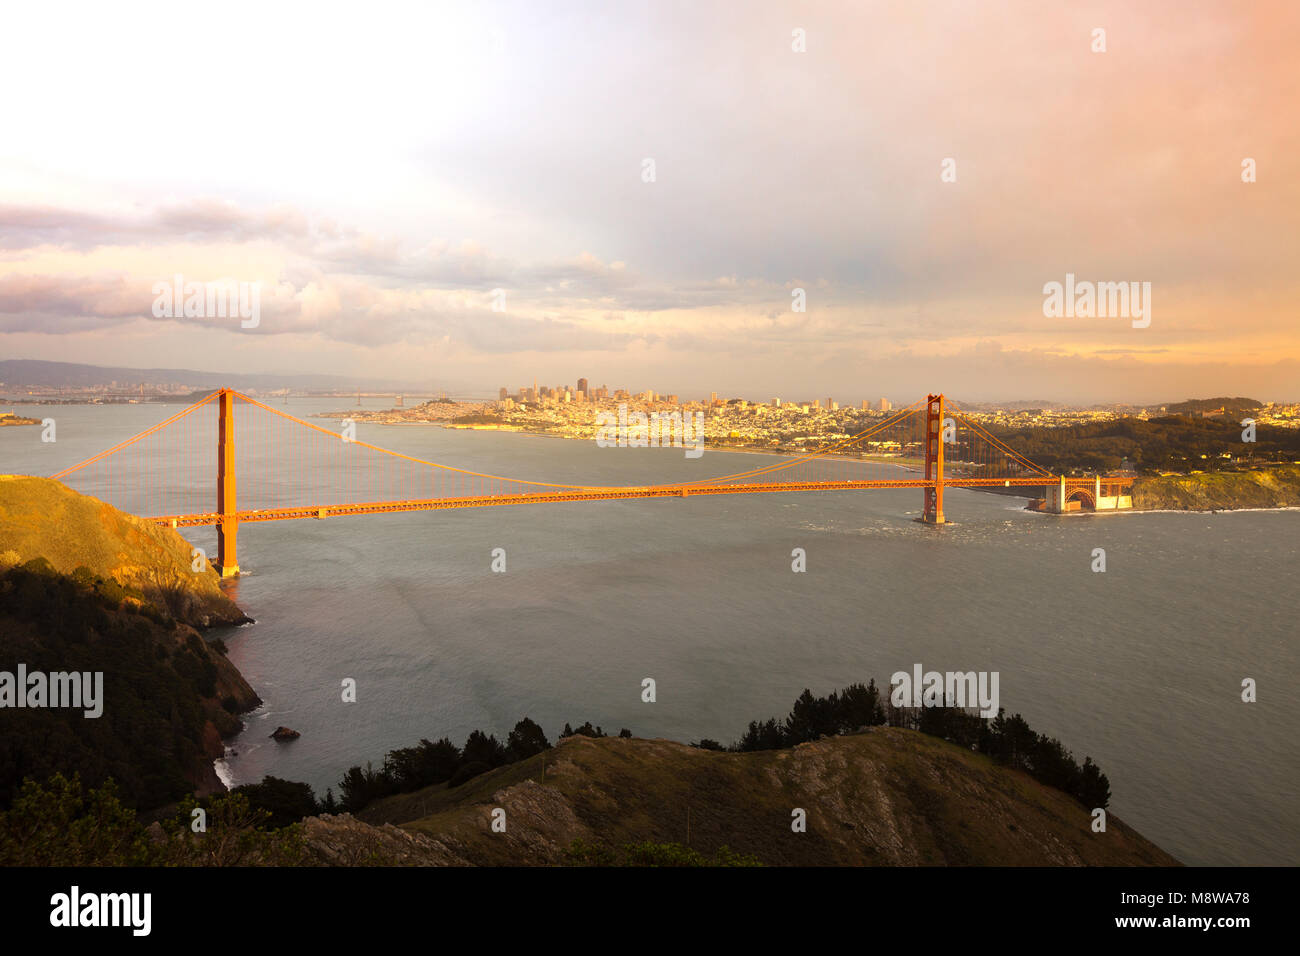 The Golden Gate Bridge at sunset, San Francisco, California, USA Stock Photo